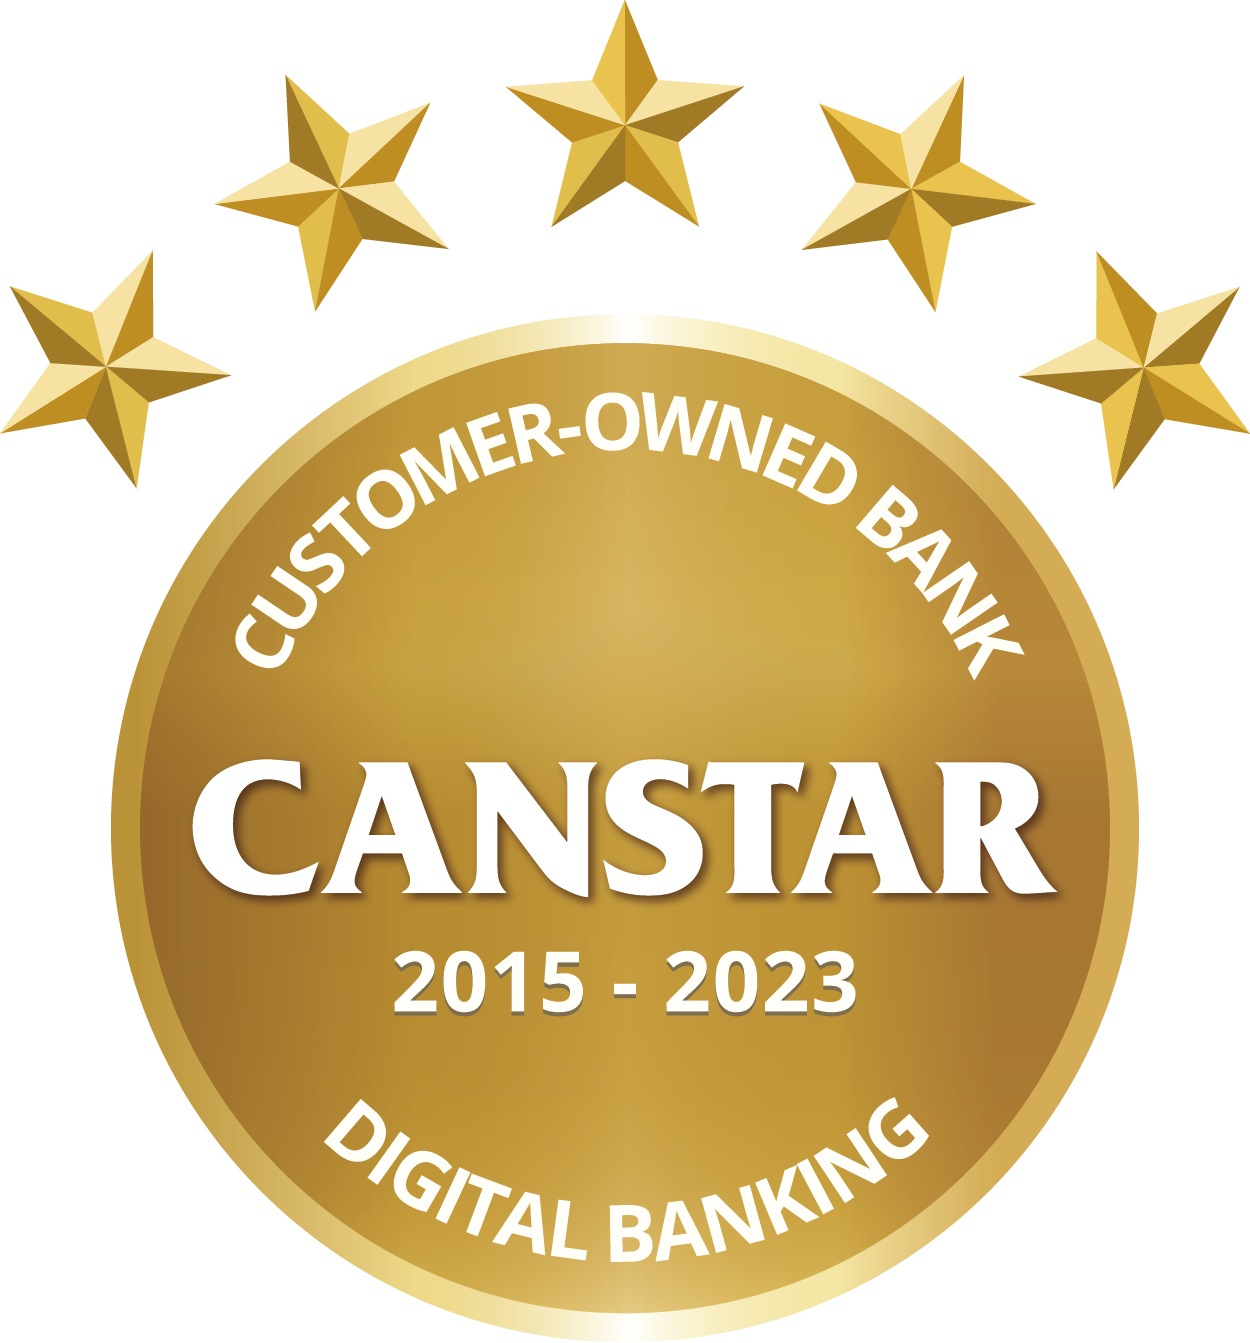 Canstar 2015-2023 Digital Banking